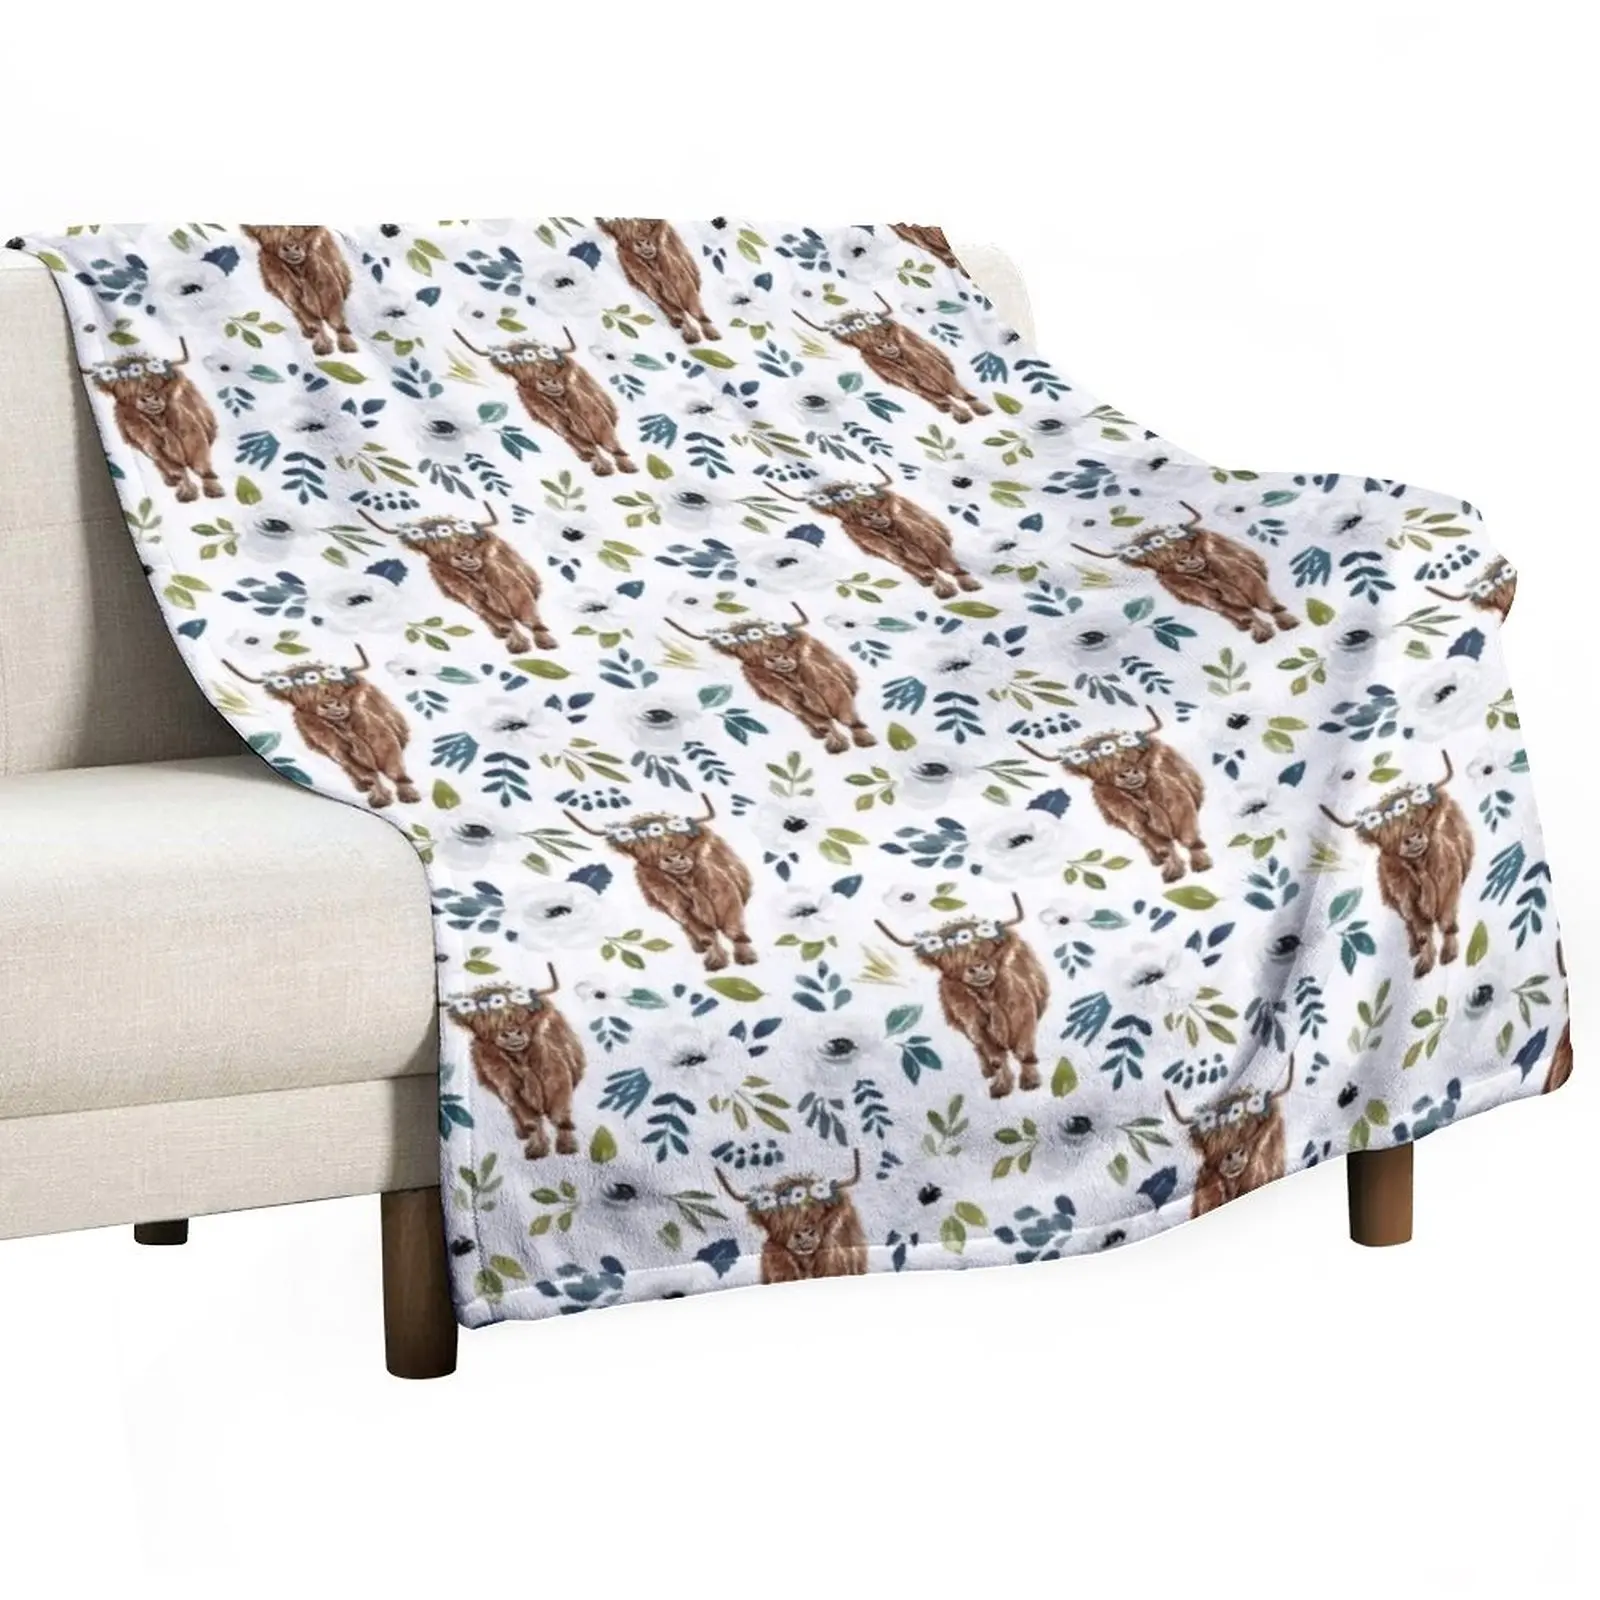 

Highland Cow, Floral, Floral Crown, Cow Painting, Farmhouse Decor Throw Blanket throw blanket for sofa Sofa Blankets